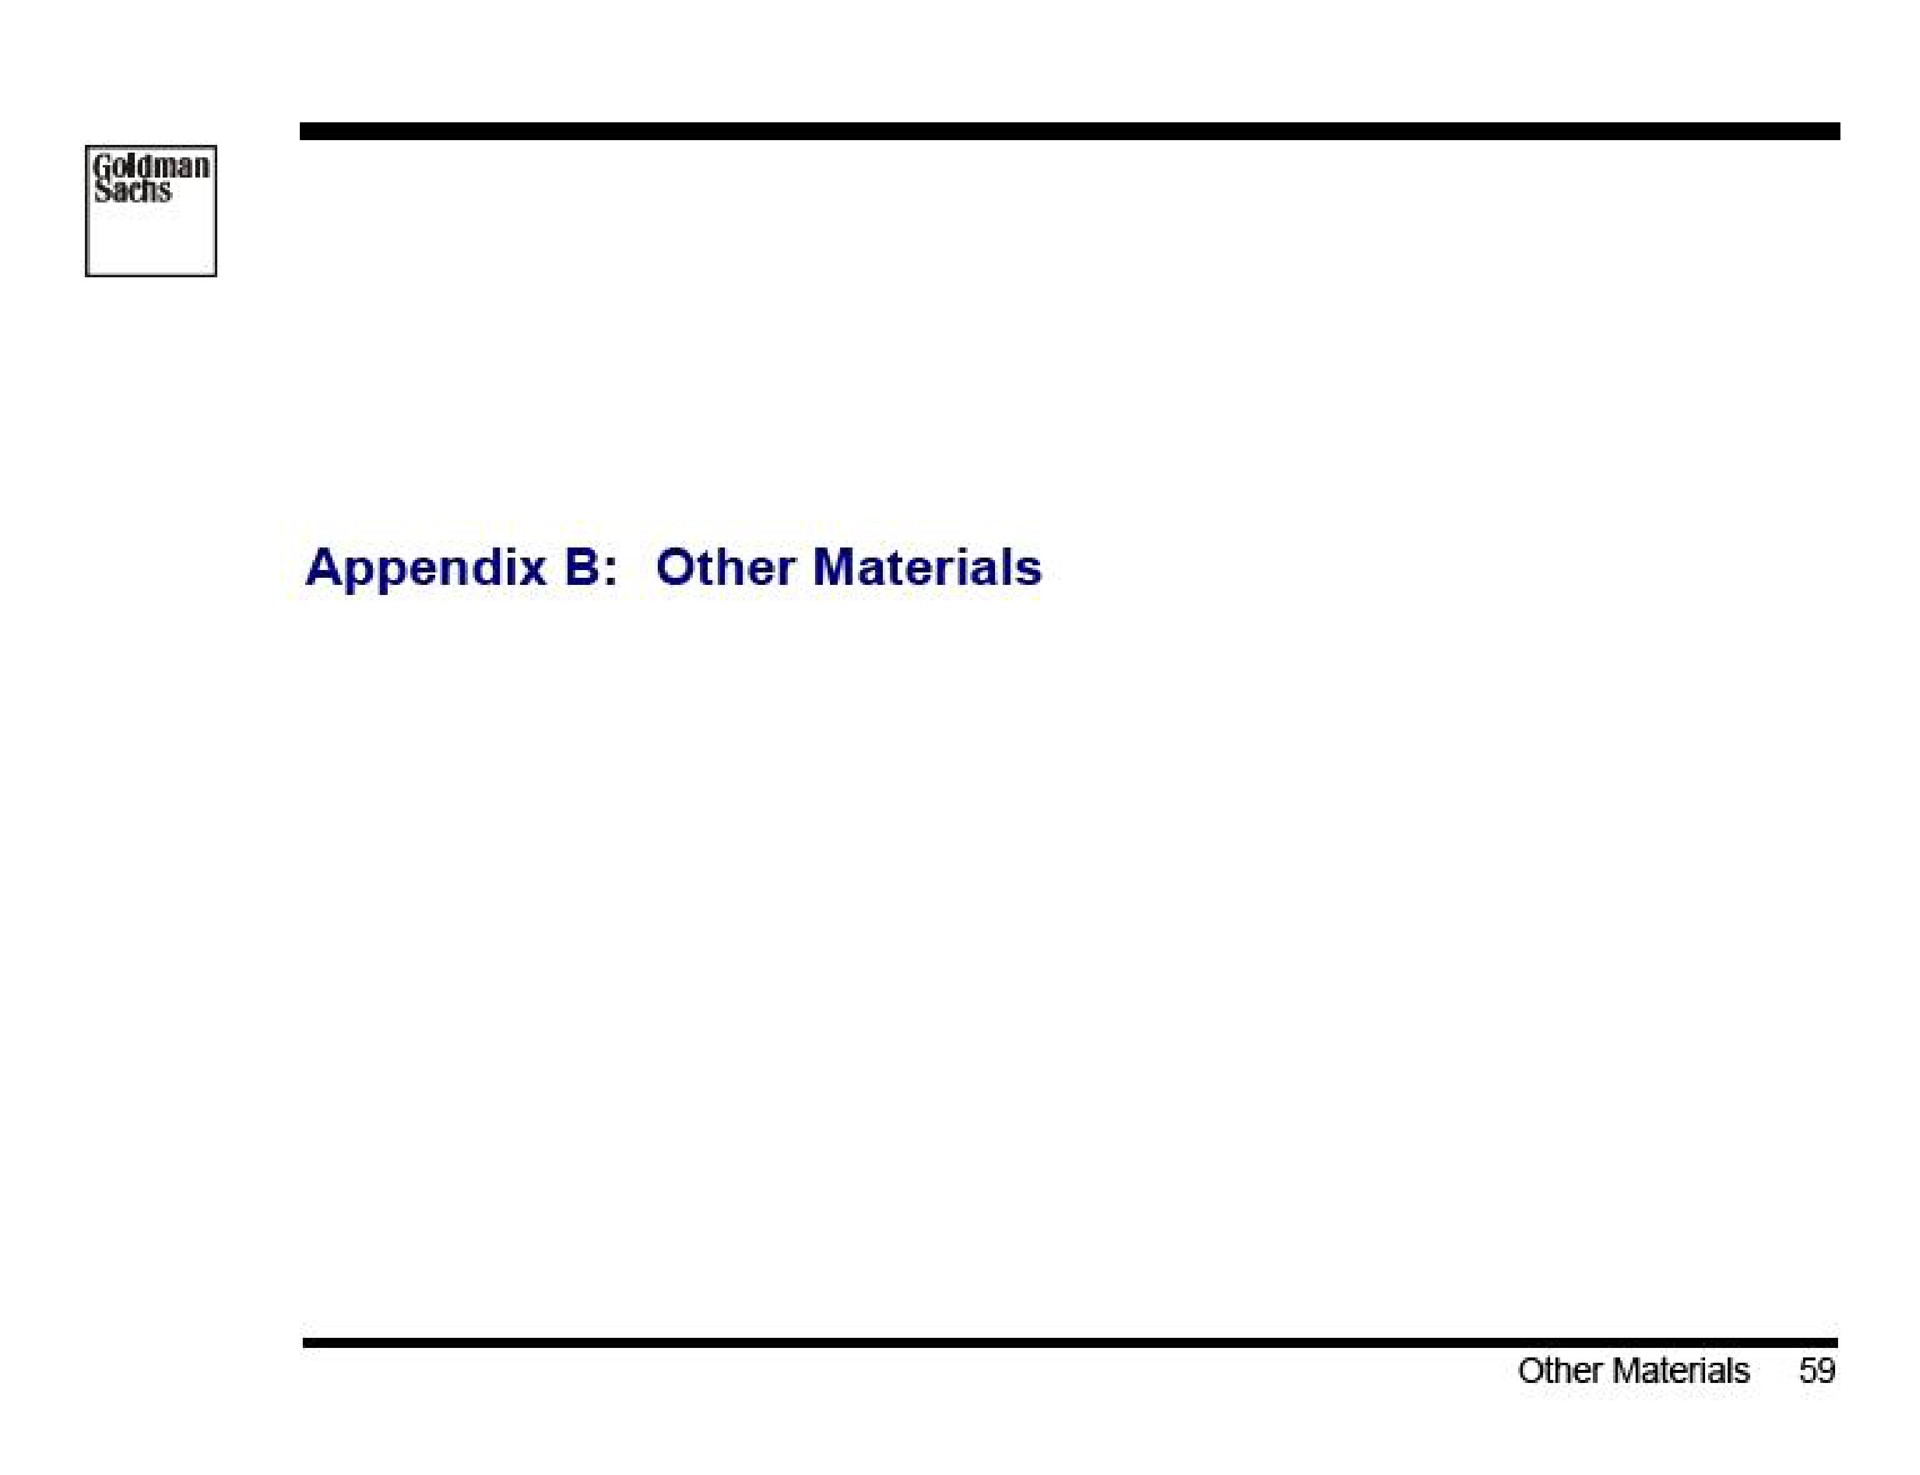 appendix other materials | Goldman Sachs